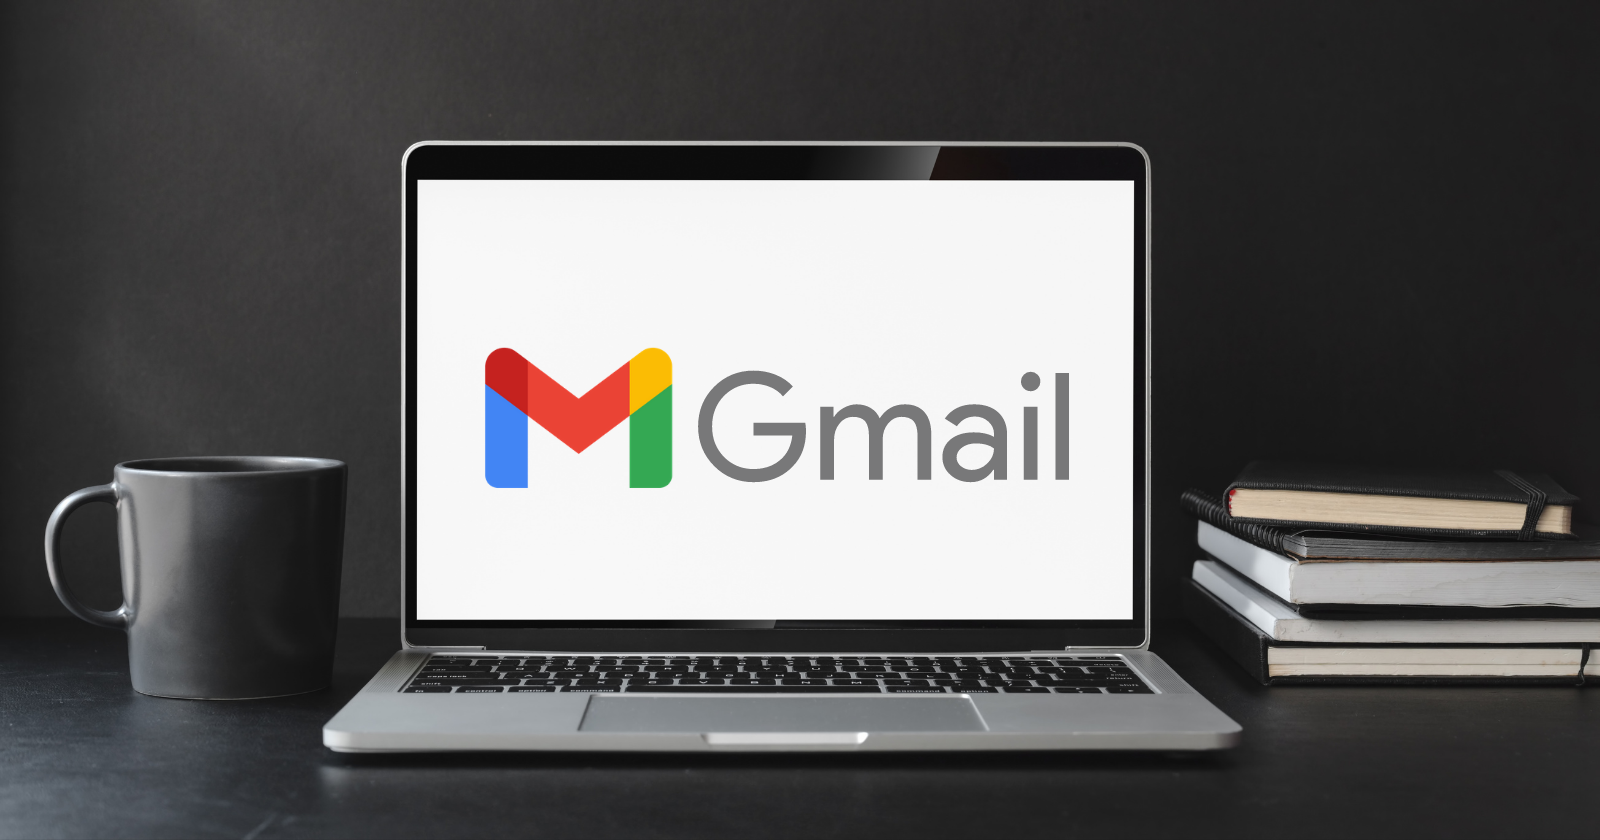 Google Gmail has more than 1.4 billion user base